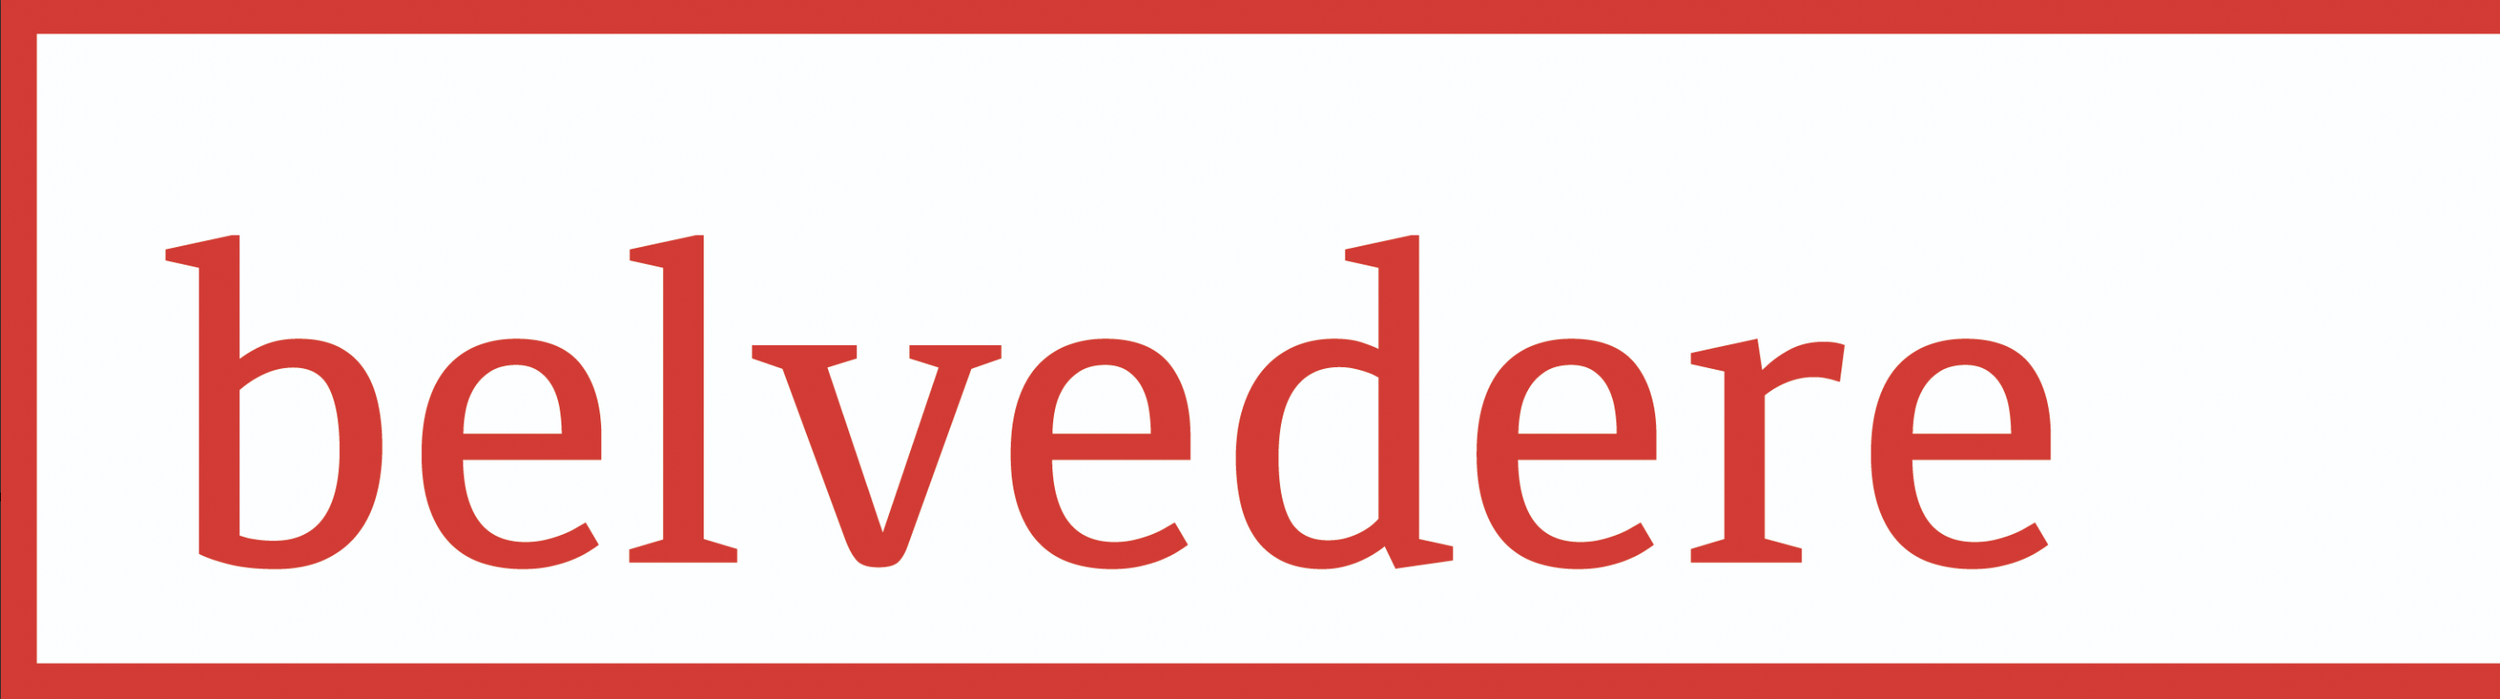 belvedere_Logo.png